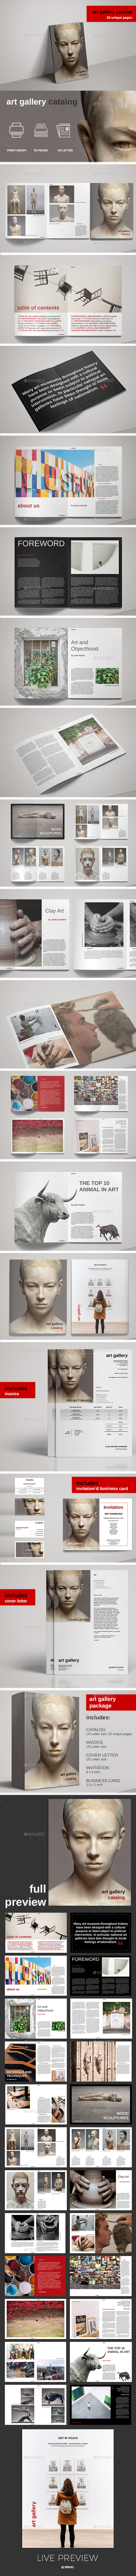  Art Gallery Exhibition Catalog 